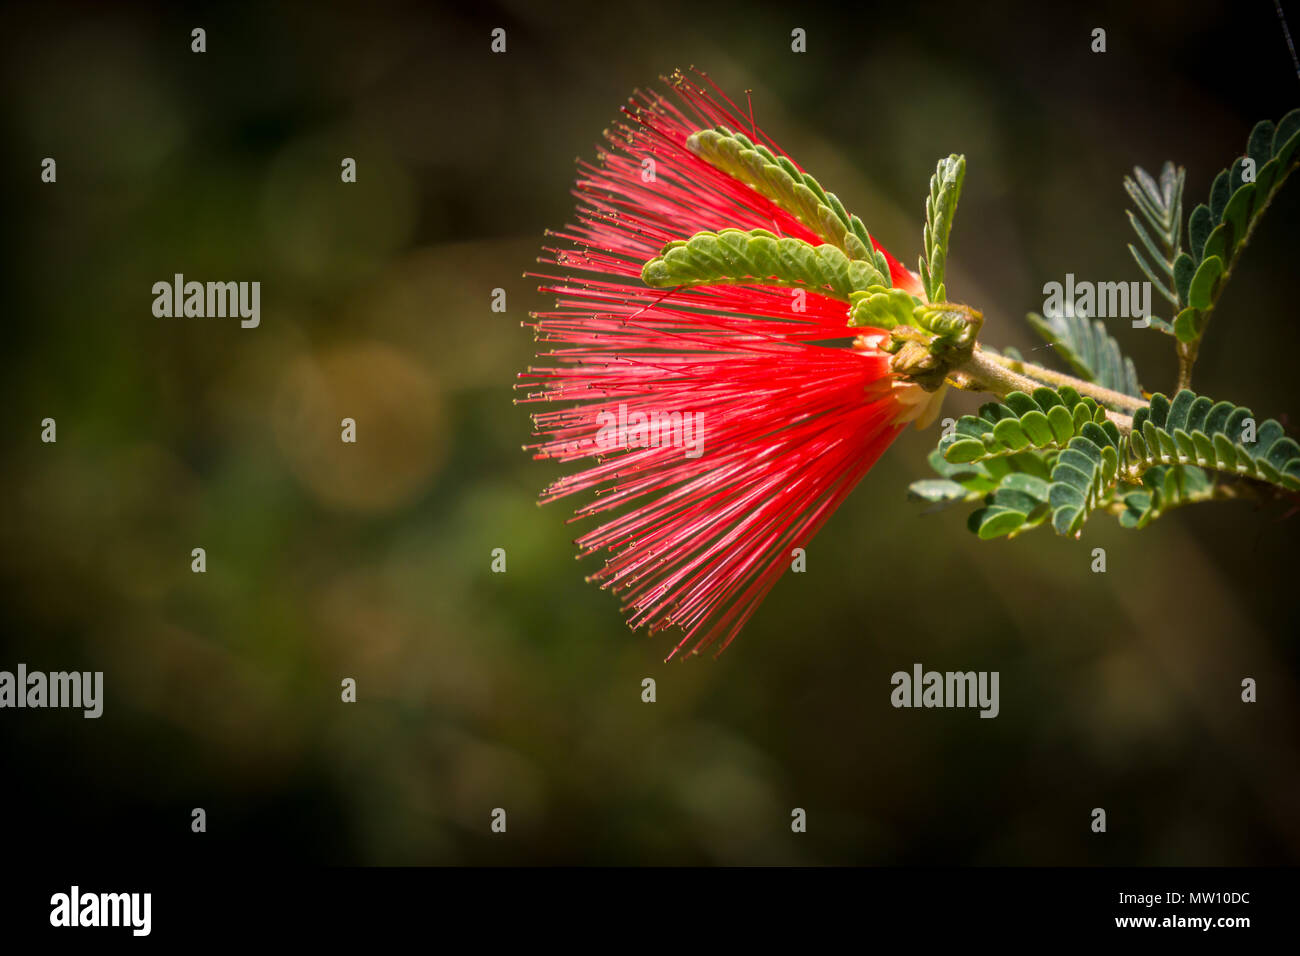 Red Baja Fairy Duster Flower Stock Photo